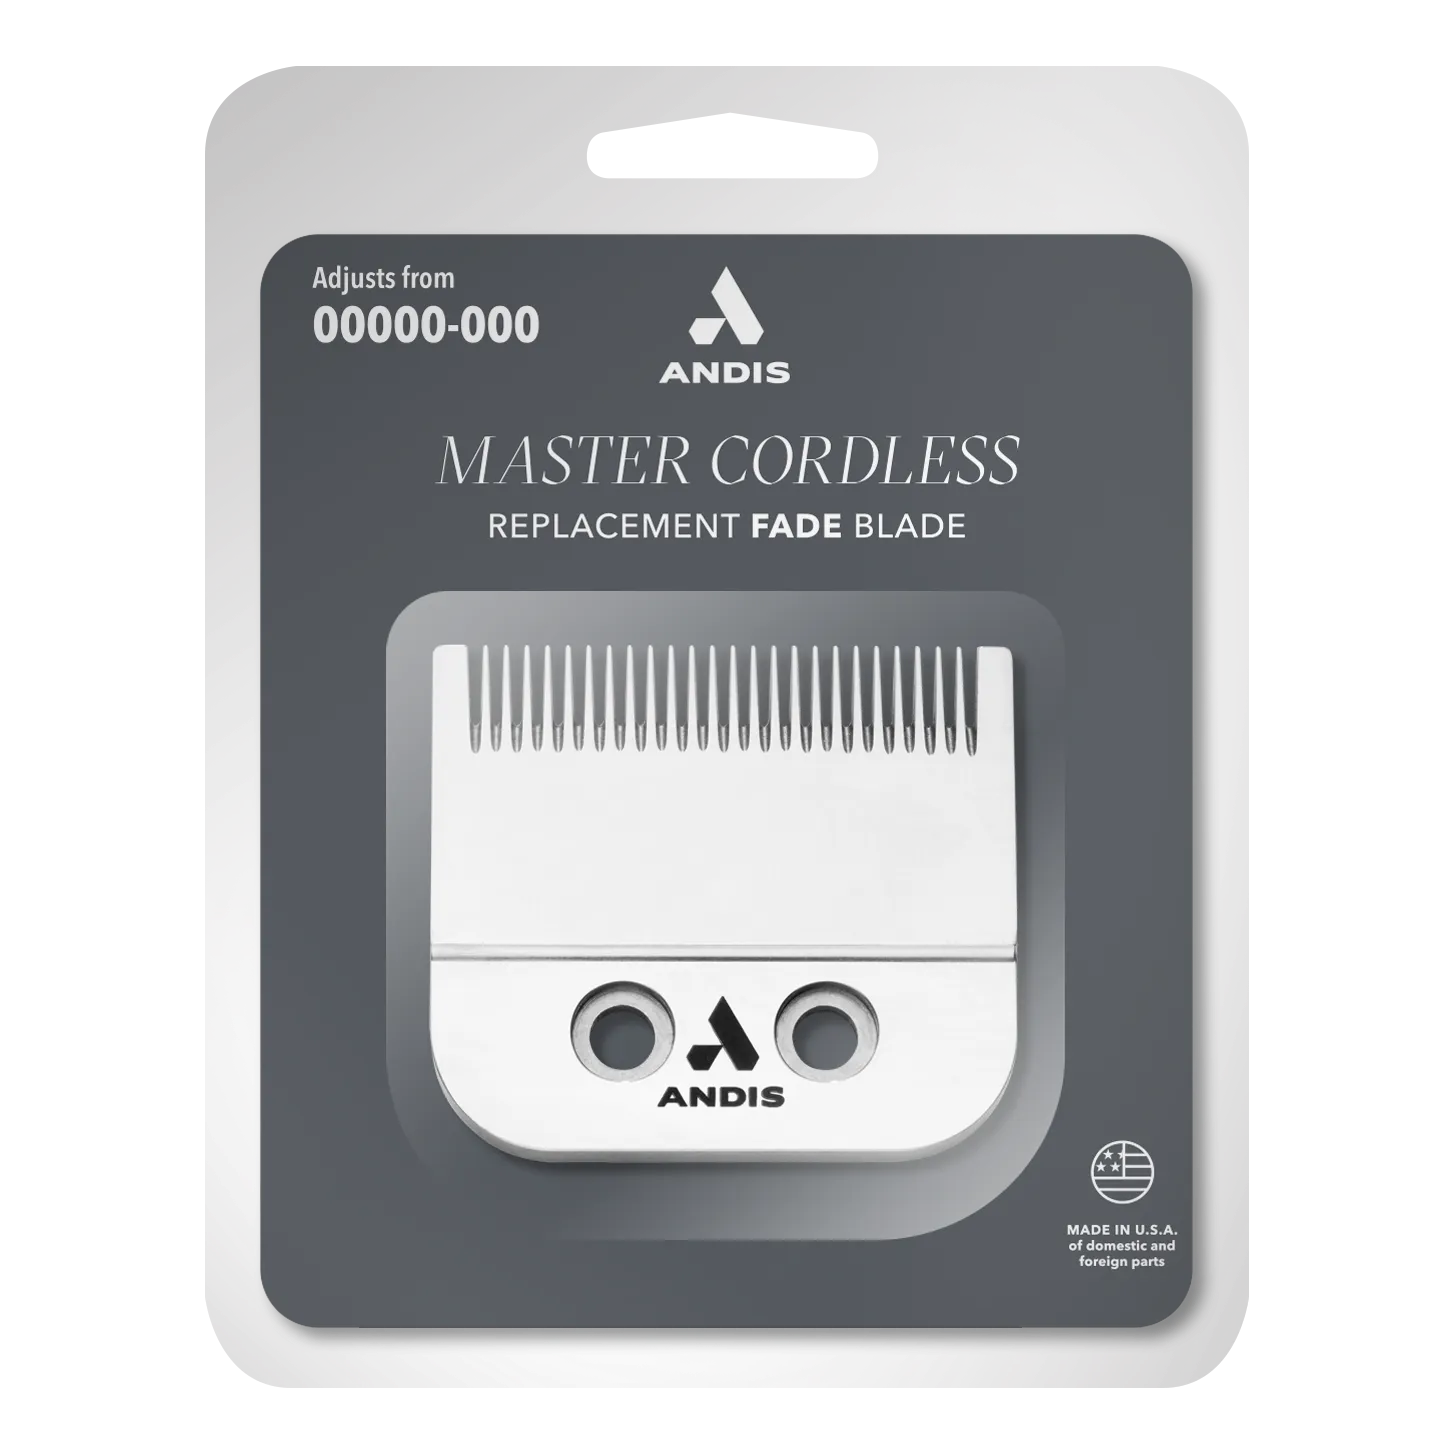 Andis Master Cordless reserveblad 00000-000 (0.2 - 0.5 mm)